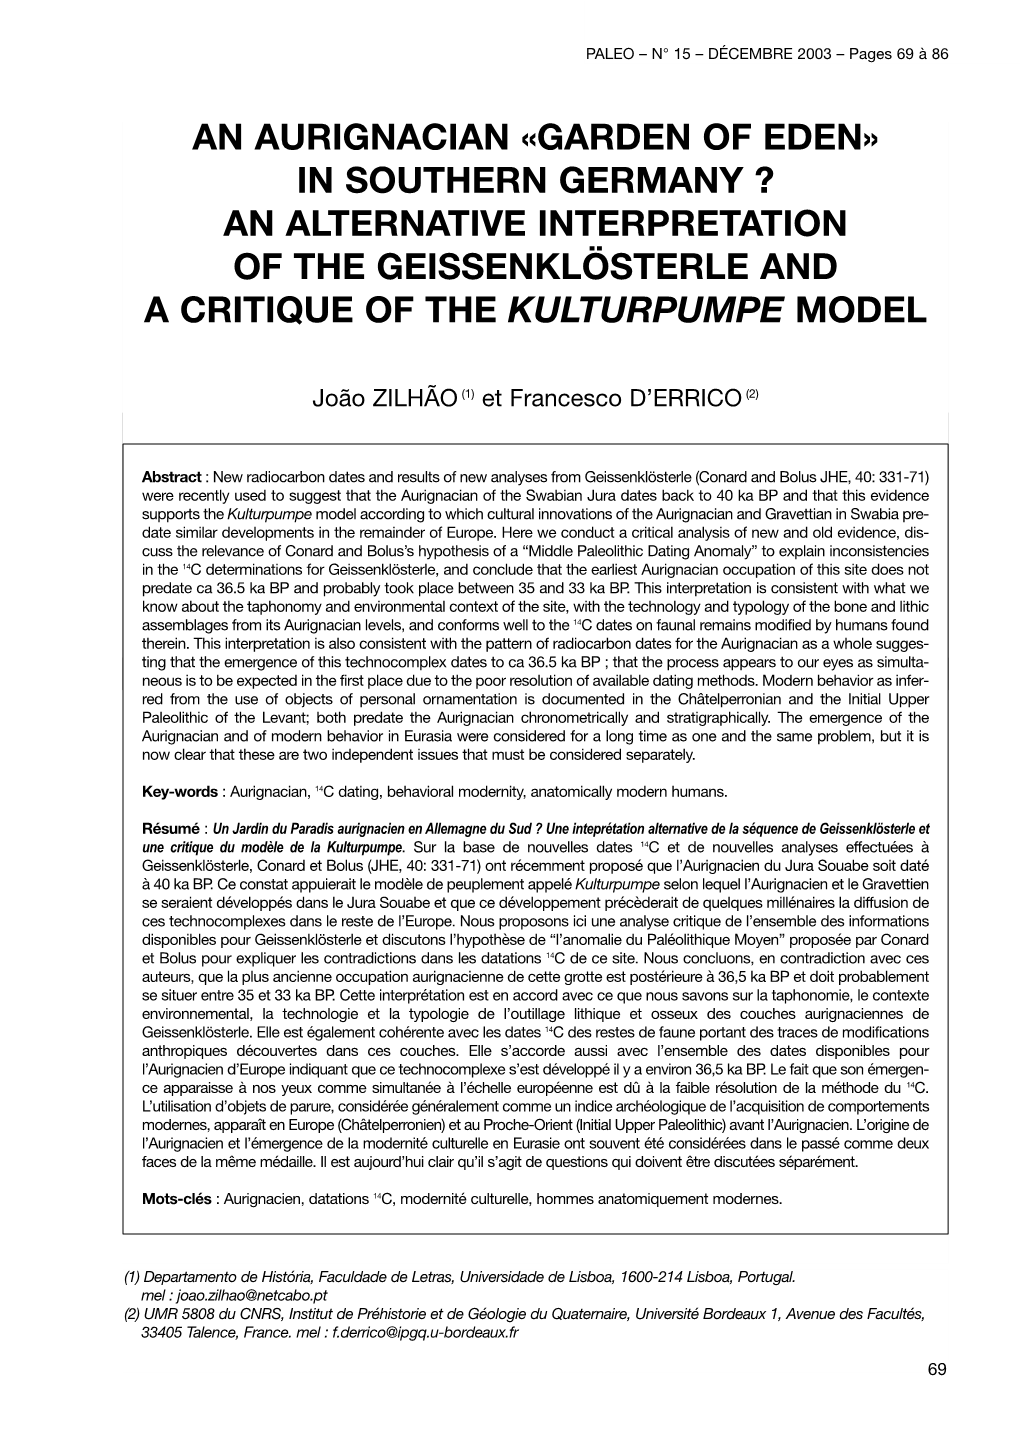 An Aurignacian «Garden of Eden» in Southern Germany ? an Alternative Interpretation of the Geissenklösterle and a Critique of the Kulturpumpe Model